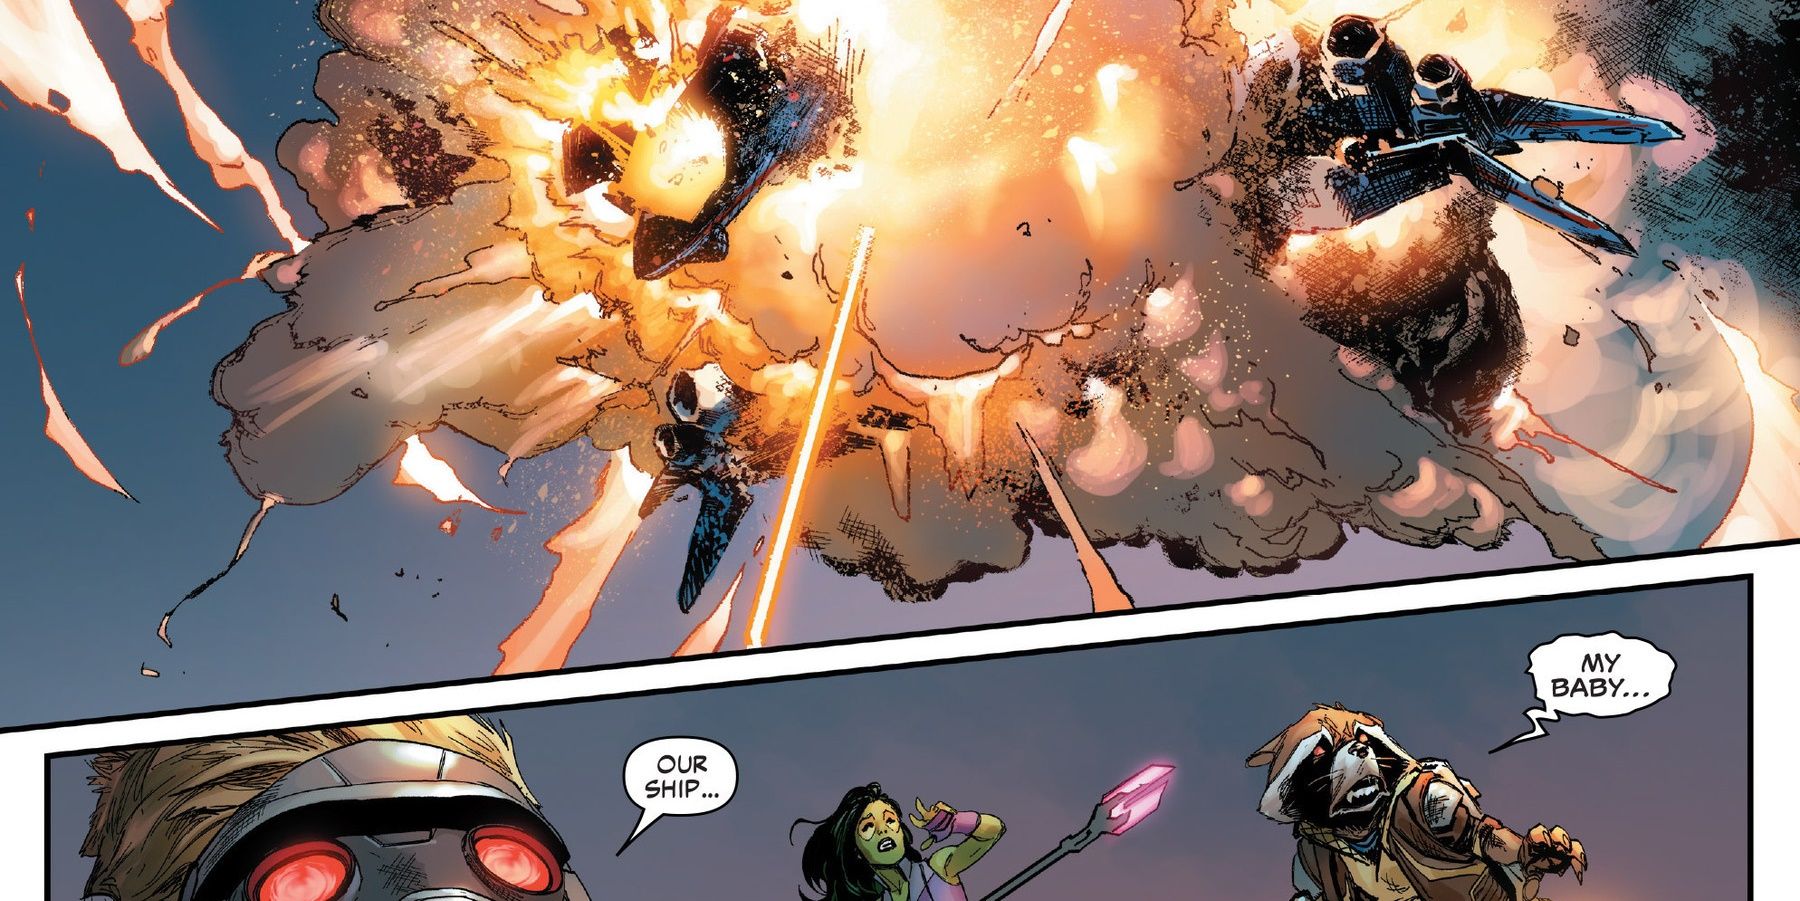 Marvel’s Civil War II Reveals a Grim Future for 2 Avengers